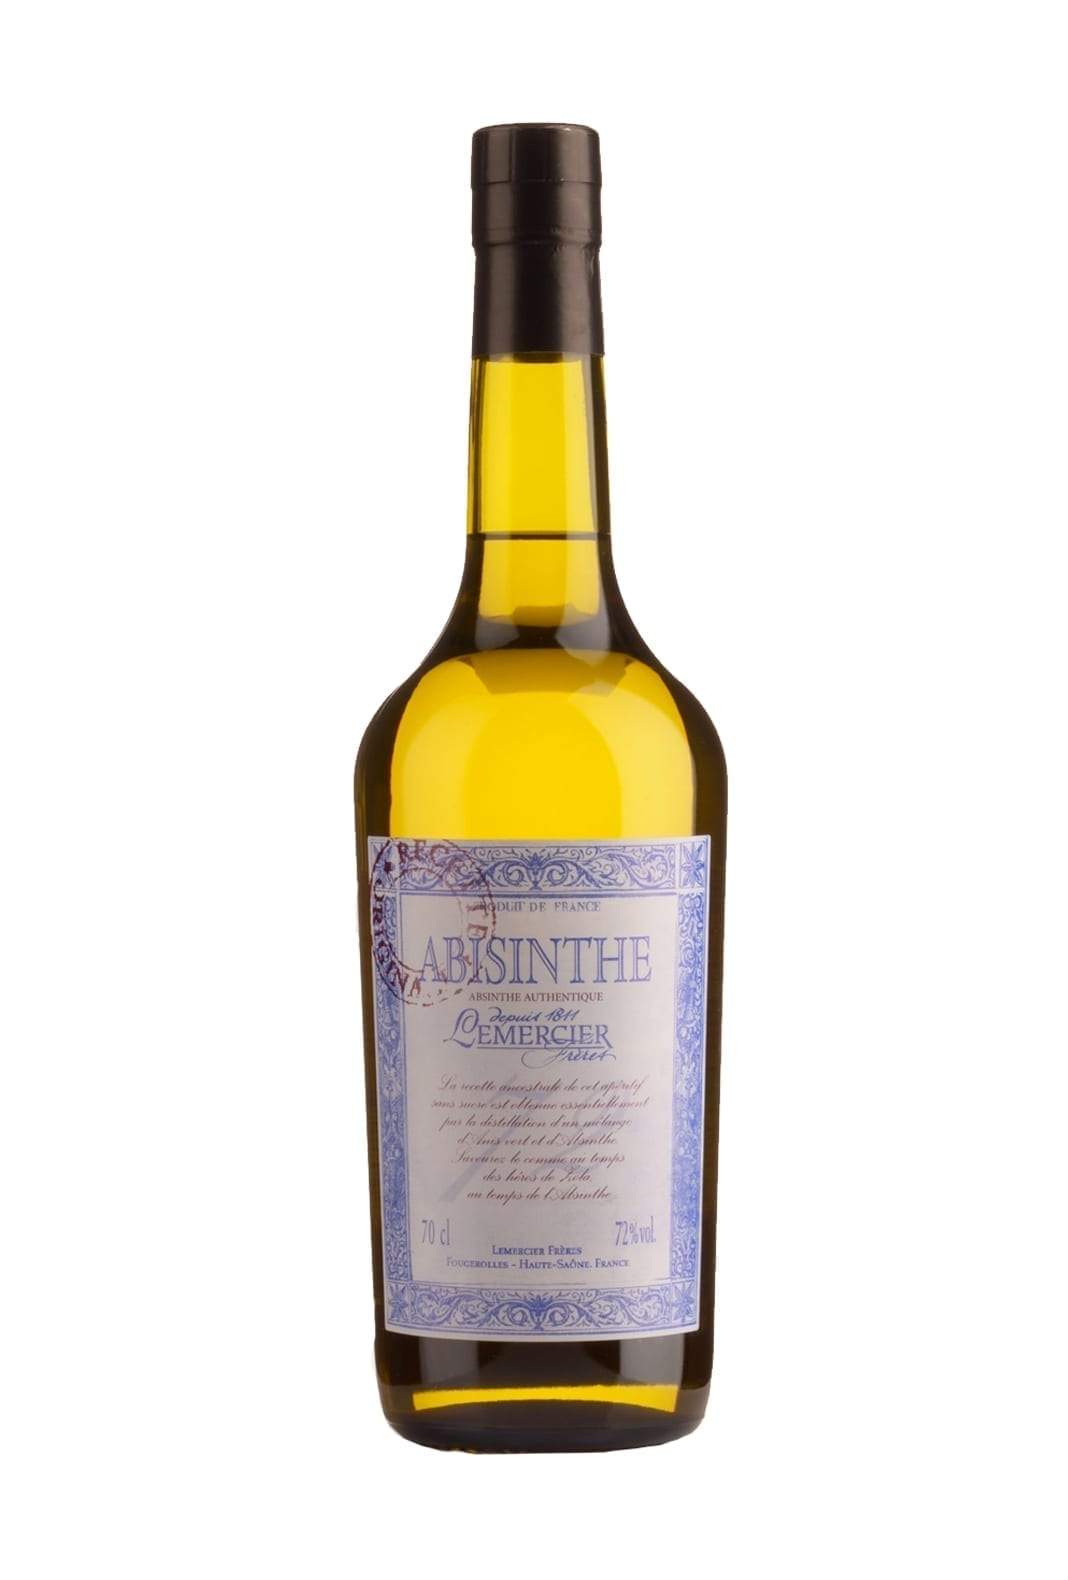 Lemercier Absinthe Blue 72% 700ml | Absinthe | Shop online at Spirits of France